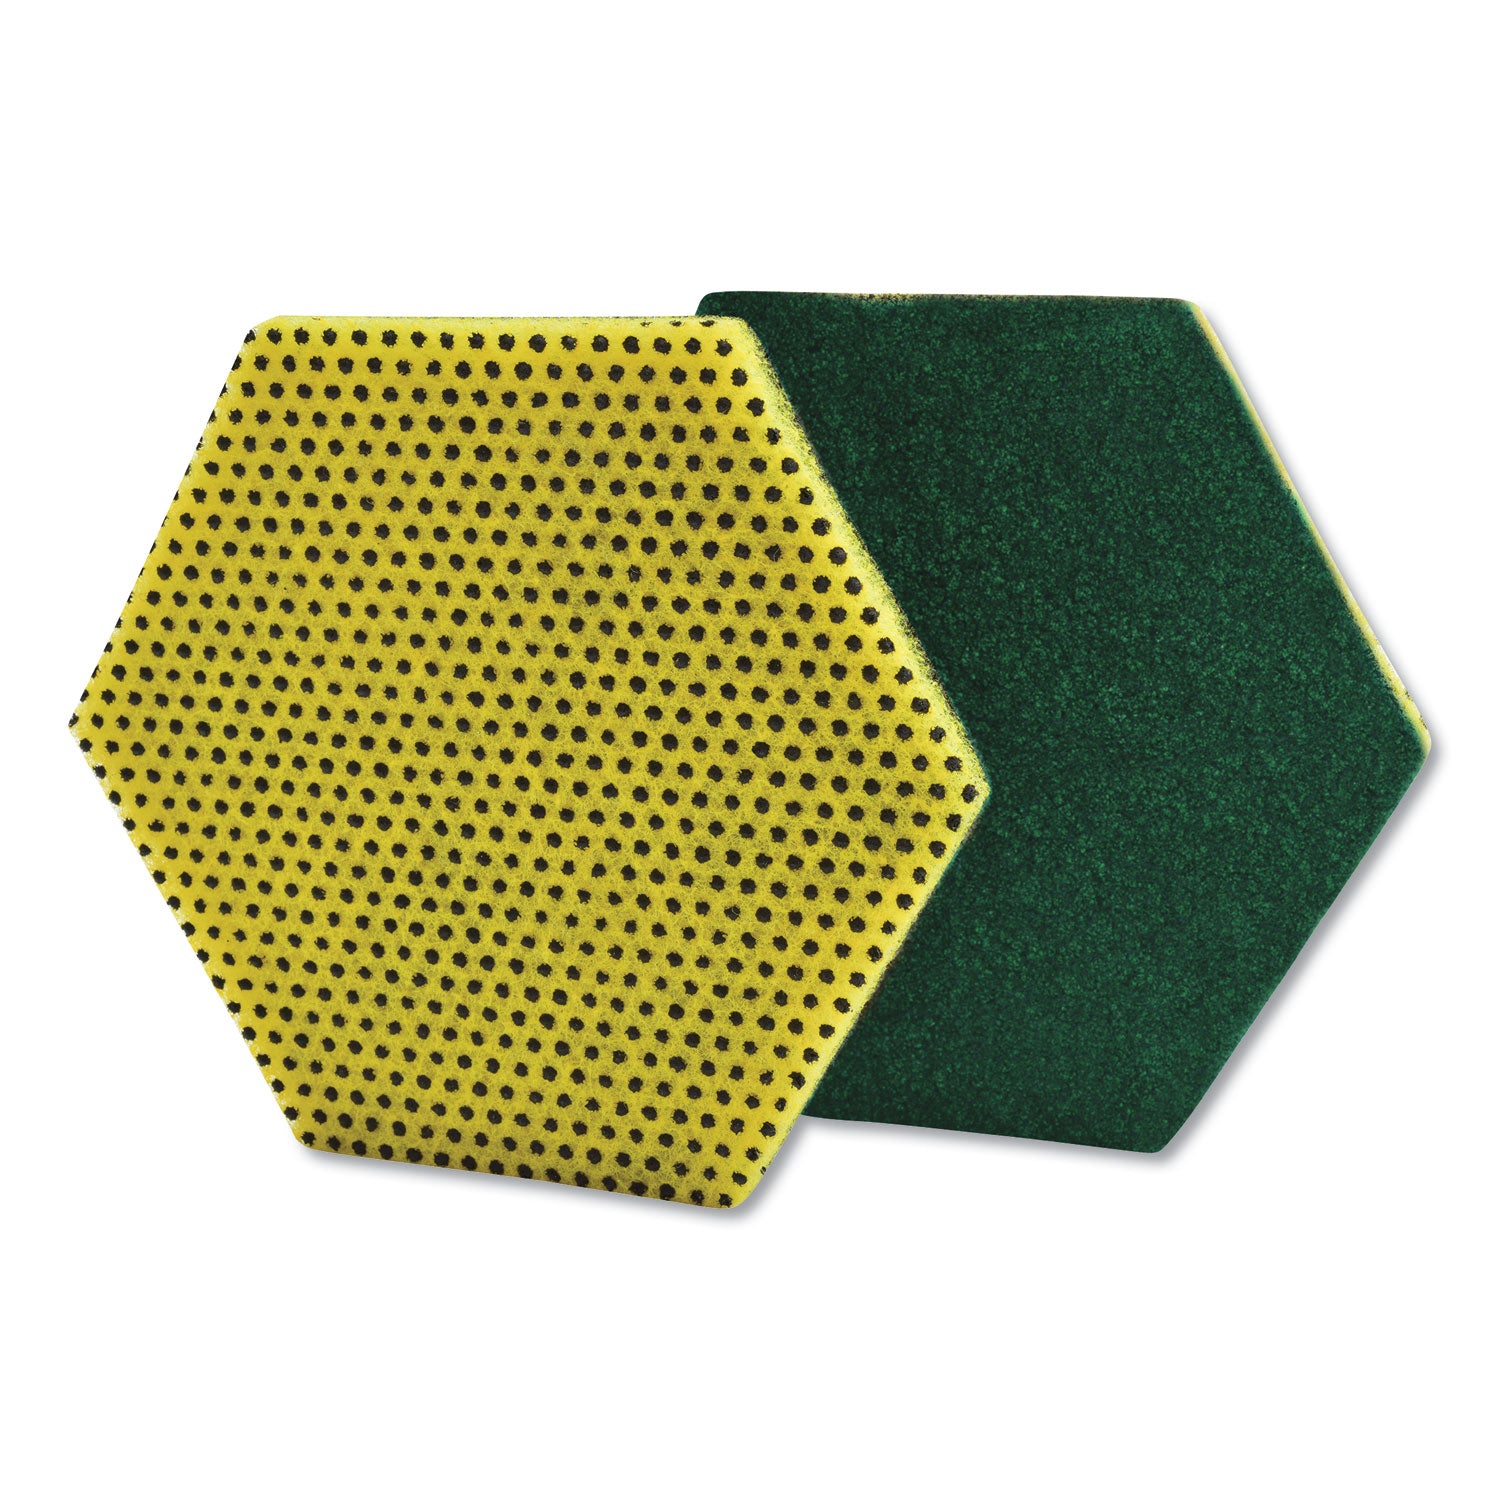 dual-purpose-scour-pad-5-x-575-green-yellow-15-carton_mmm96hex - 1